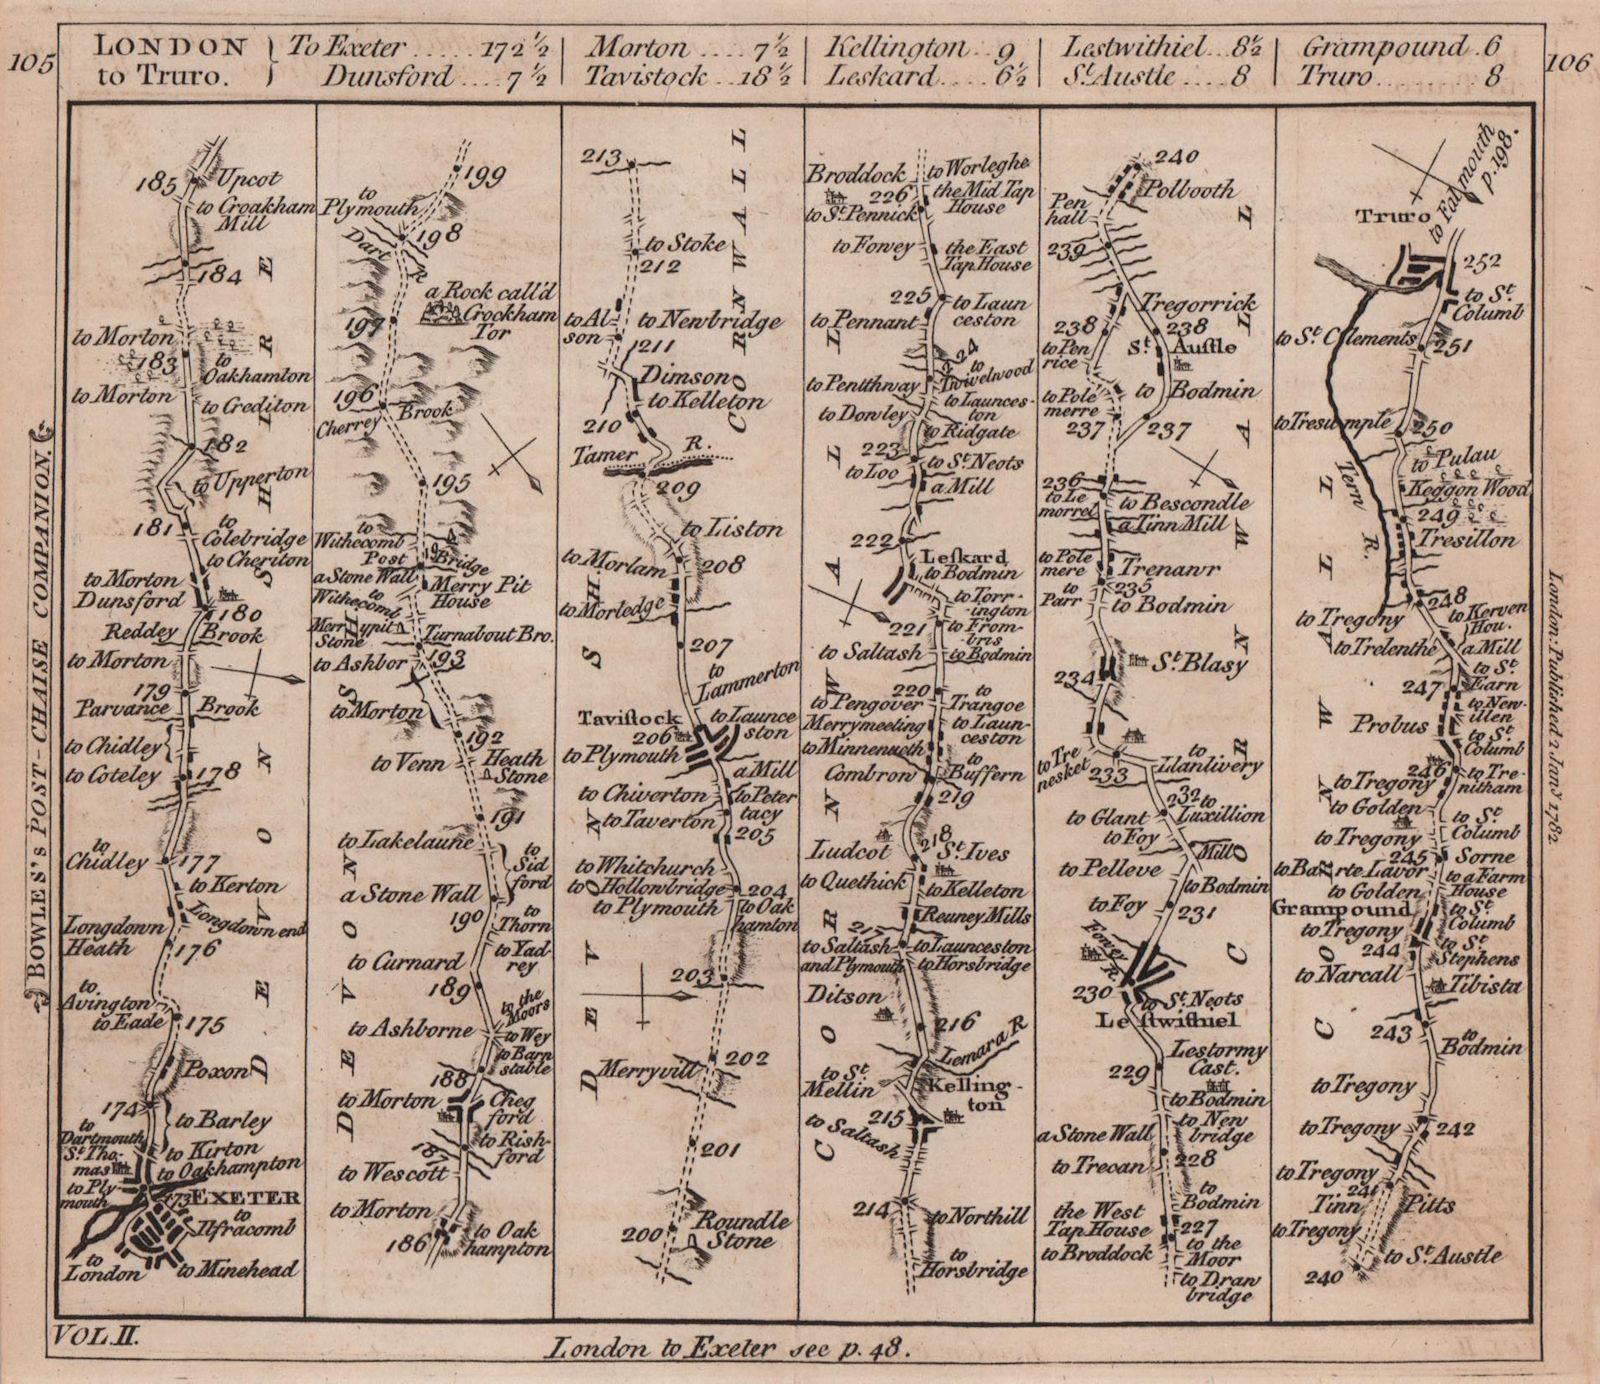 Exeter-Tavistock-Liskeard-St Austell-Truro road strip map. BOWLES 1782 old